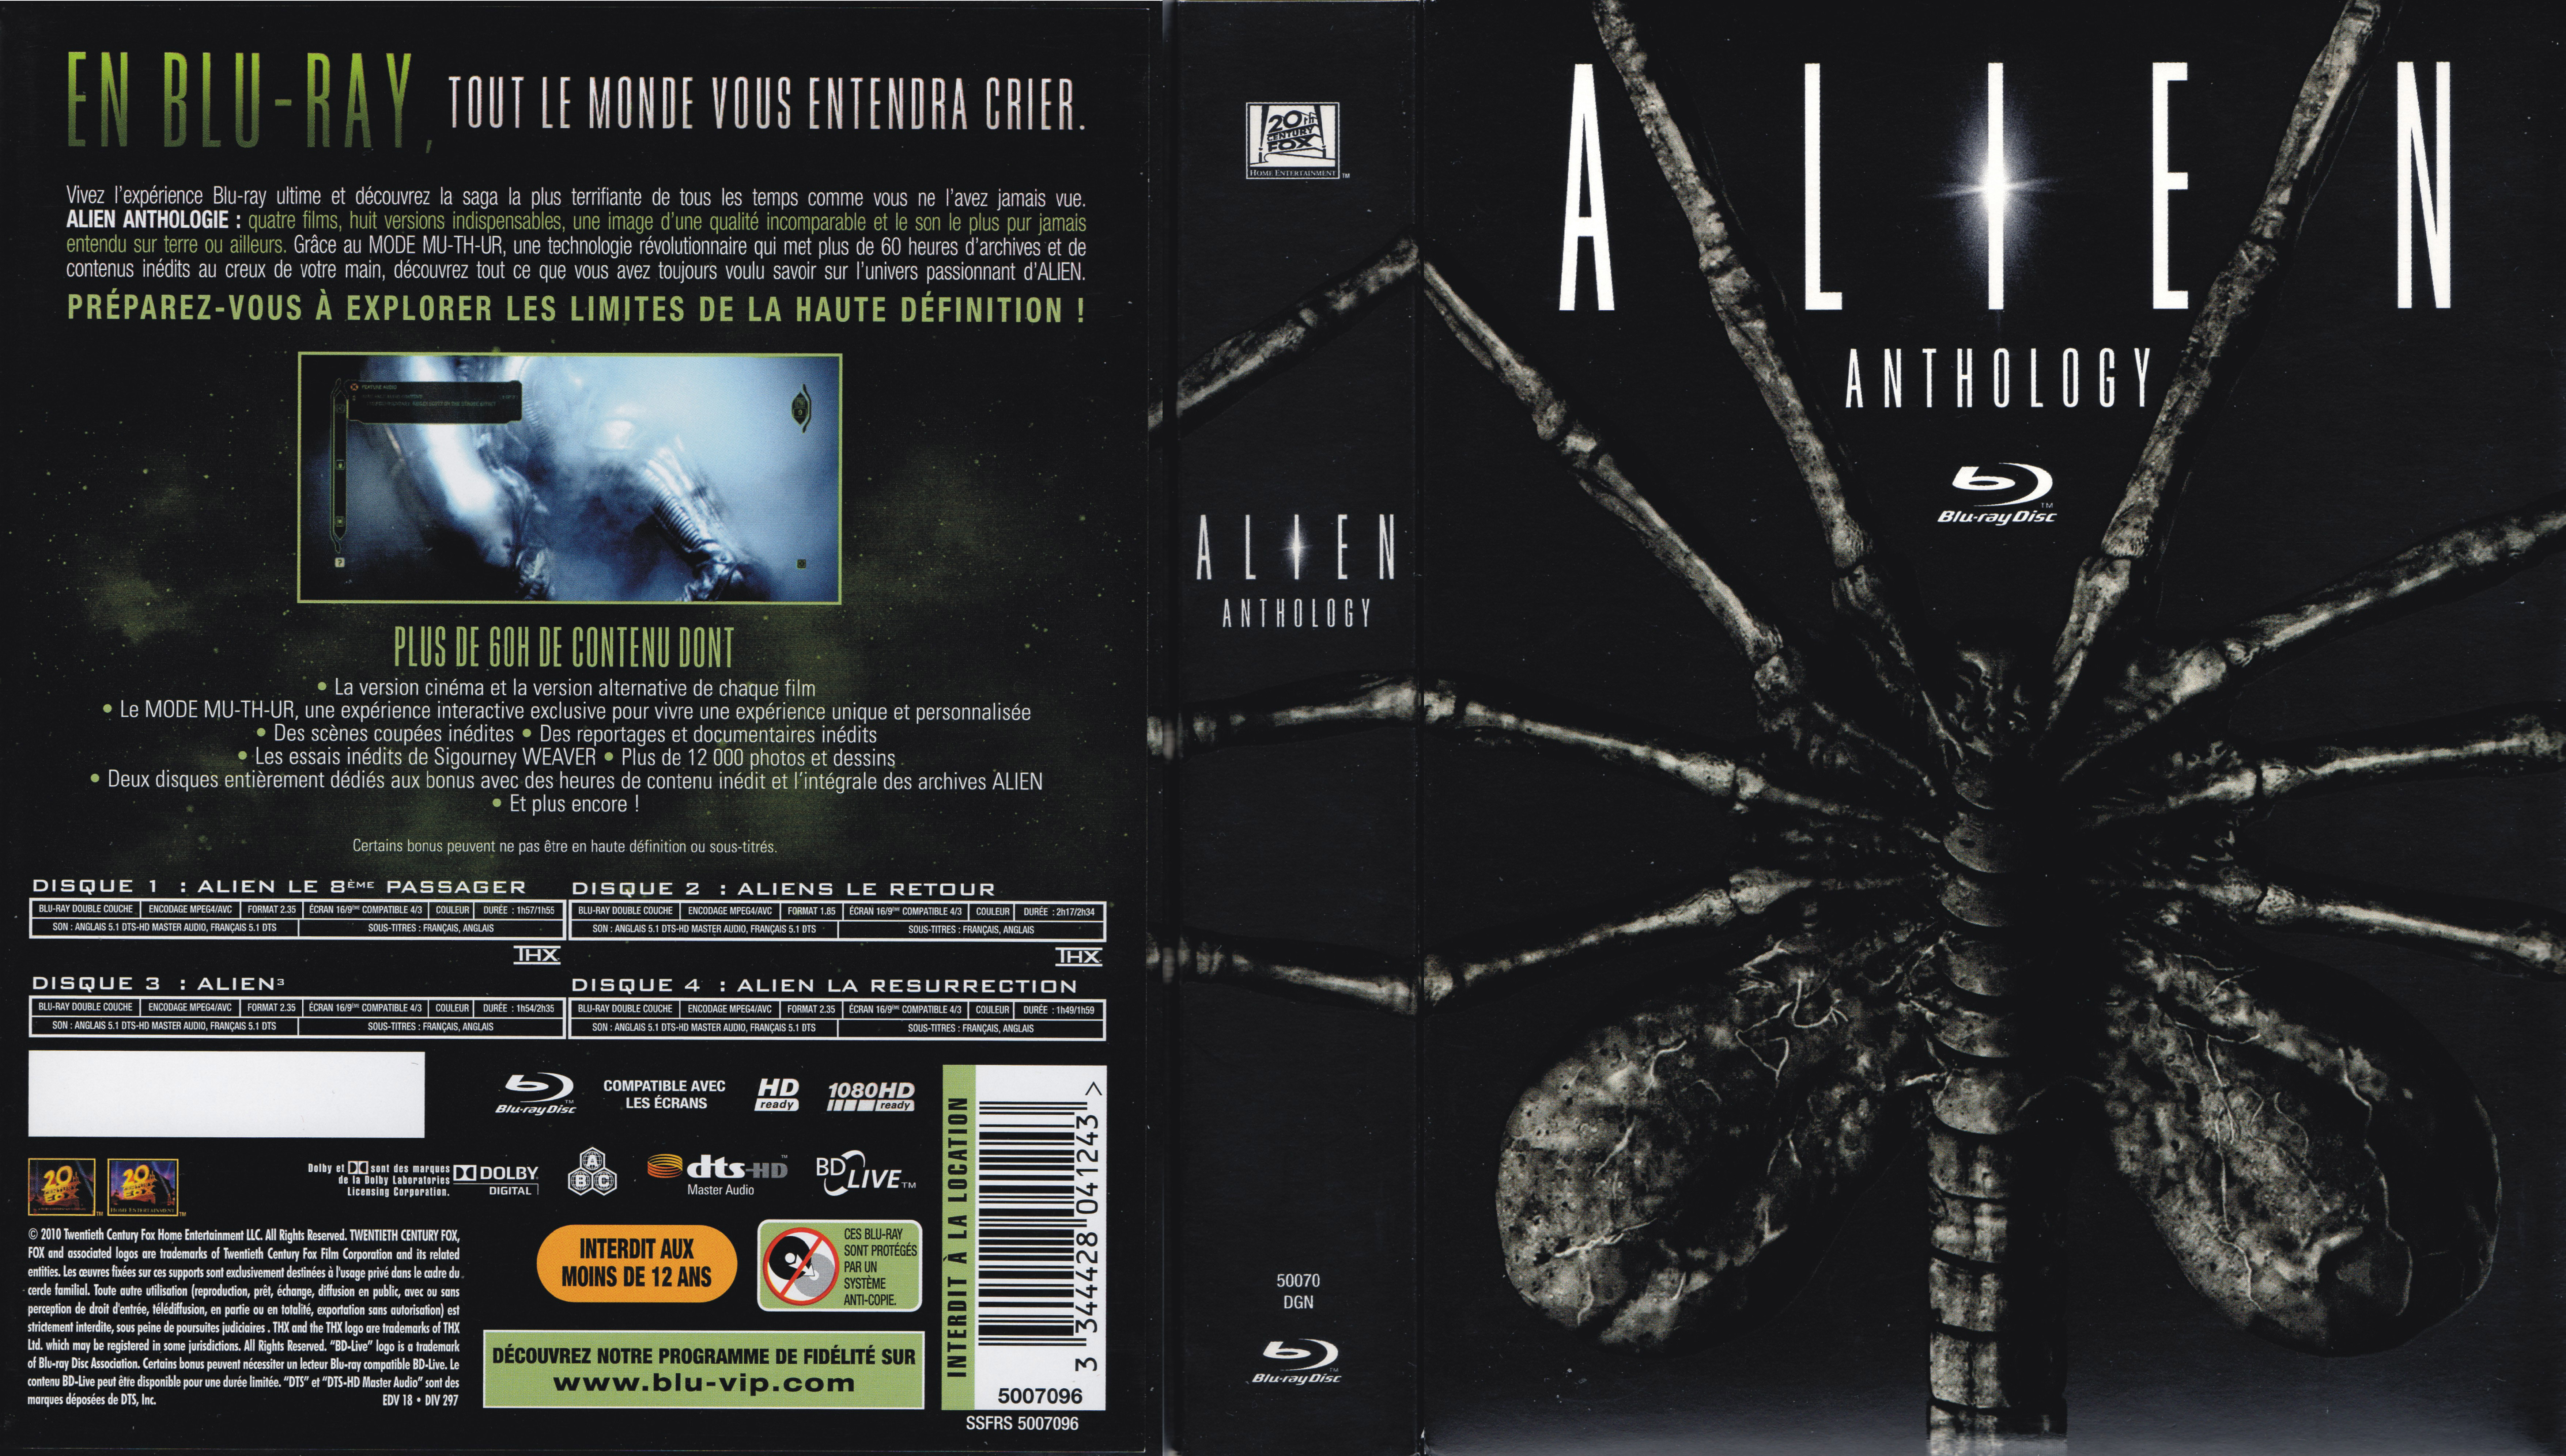 Jaquette DVD Alien anthology (BLU-RAY)